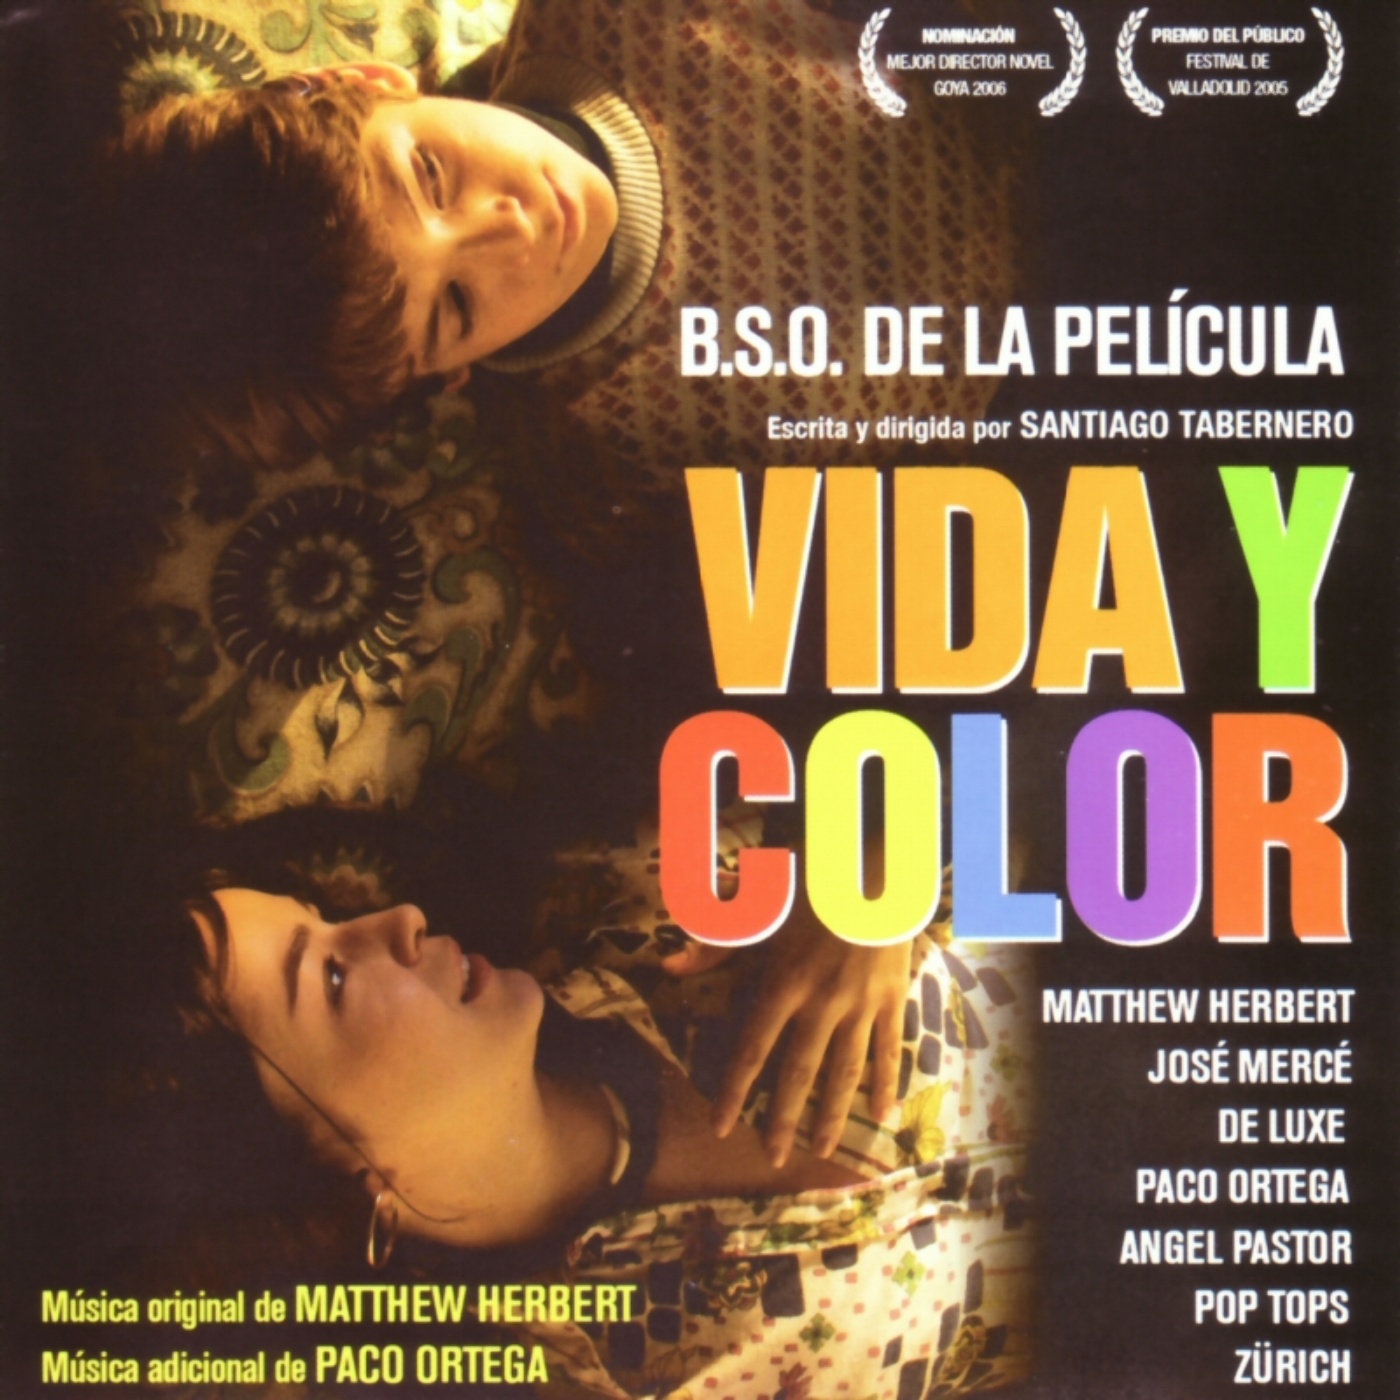 Vida y Color (Original Motion Picture Soundtrack)